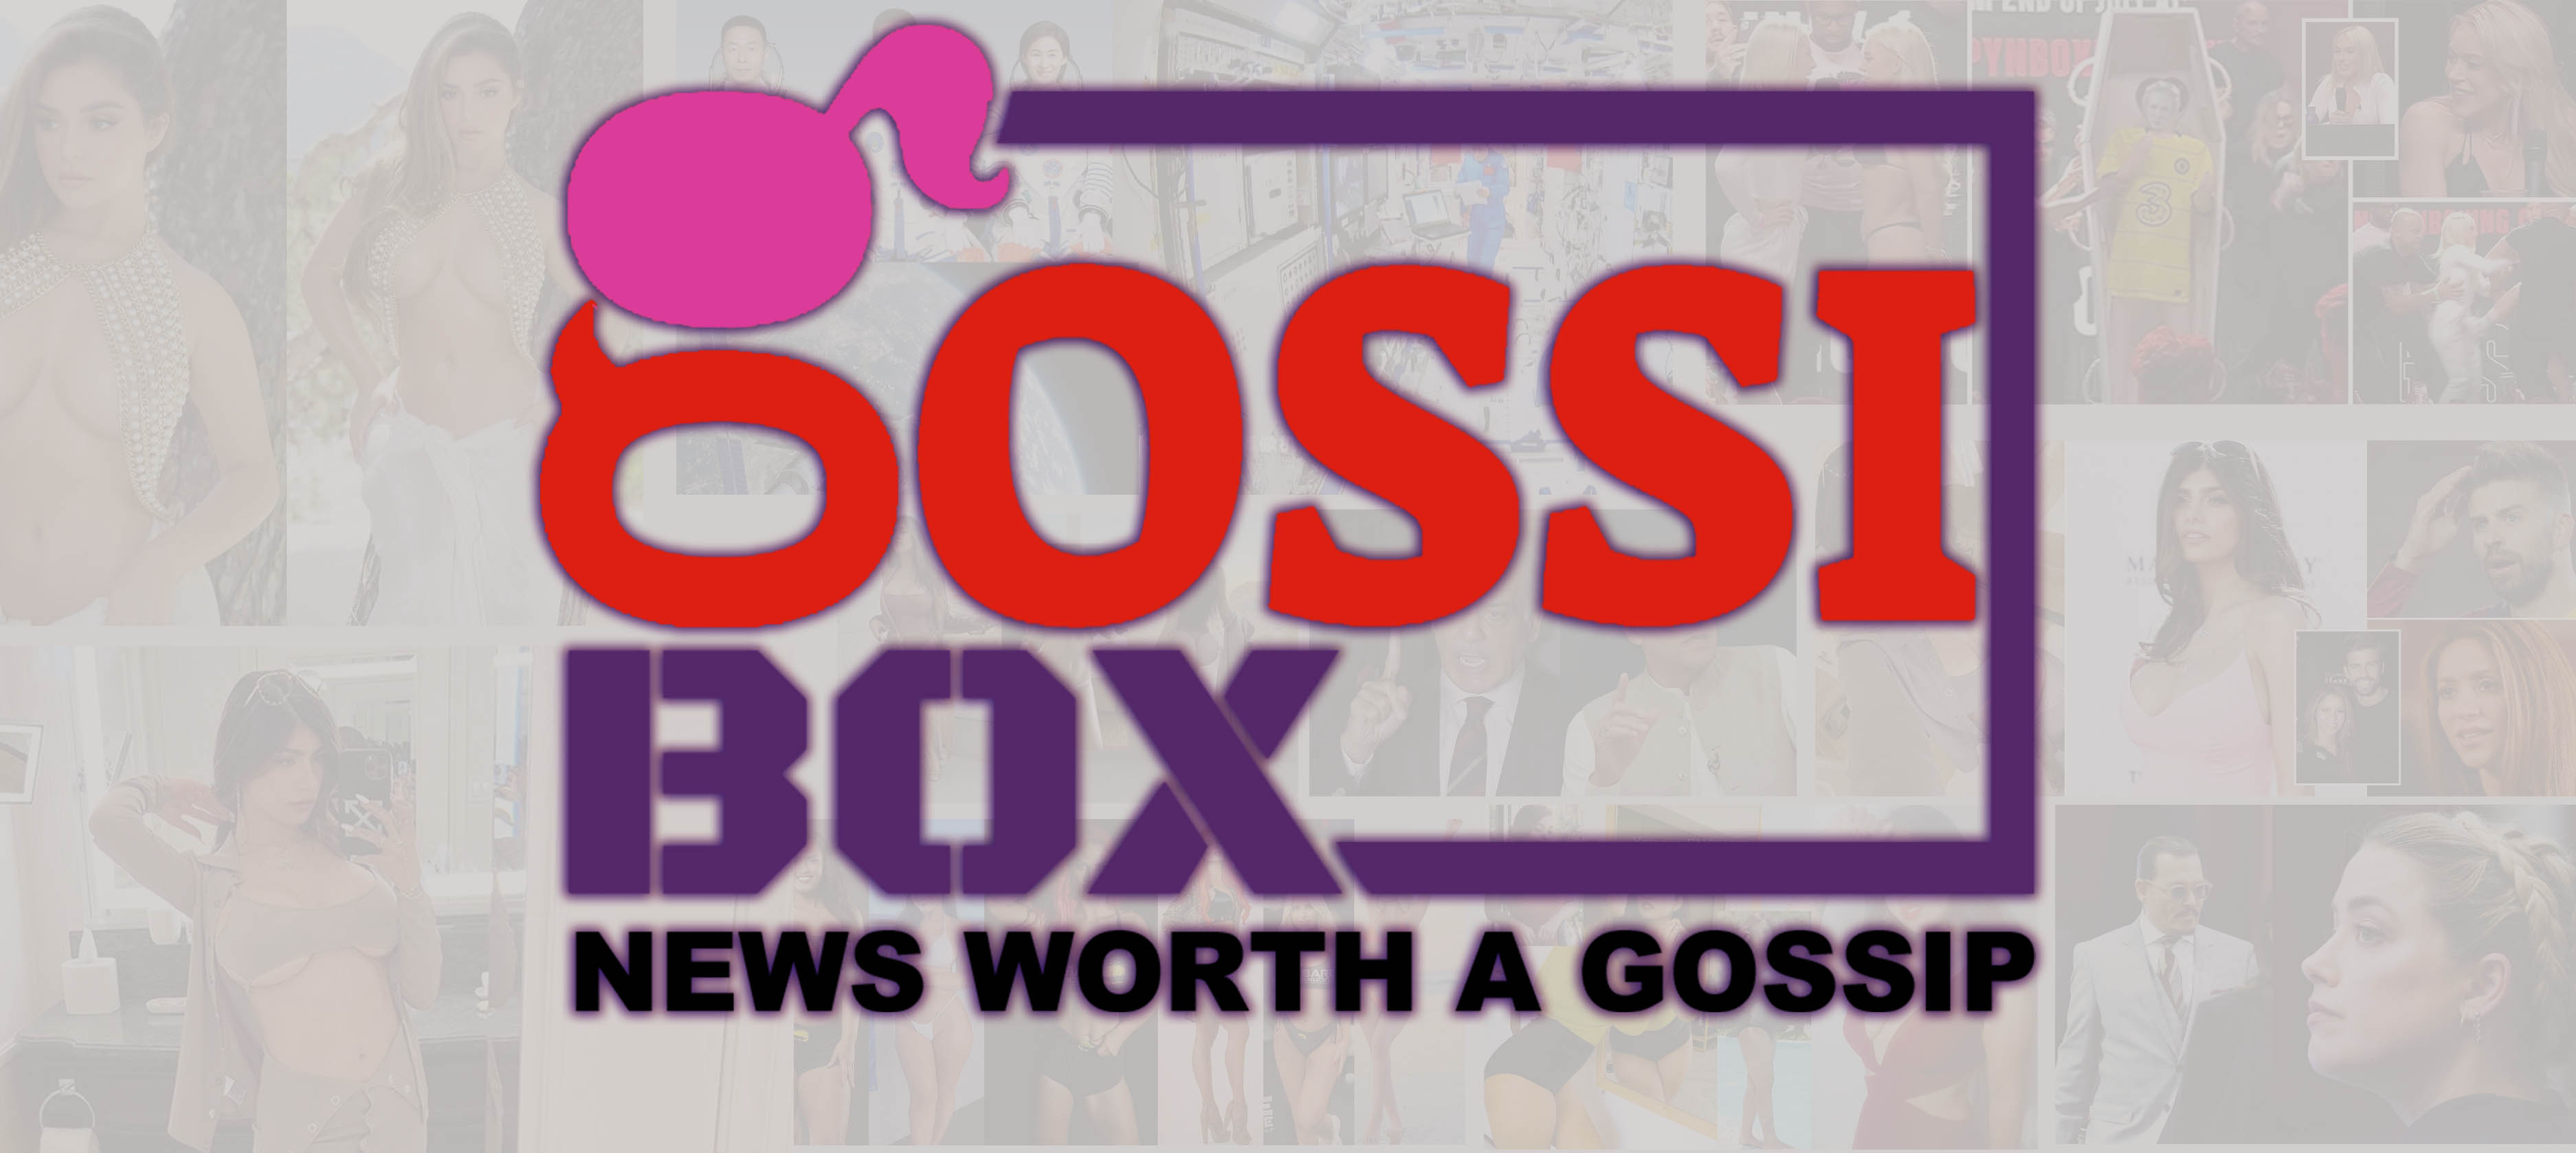 (c) Gossibox.com